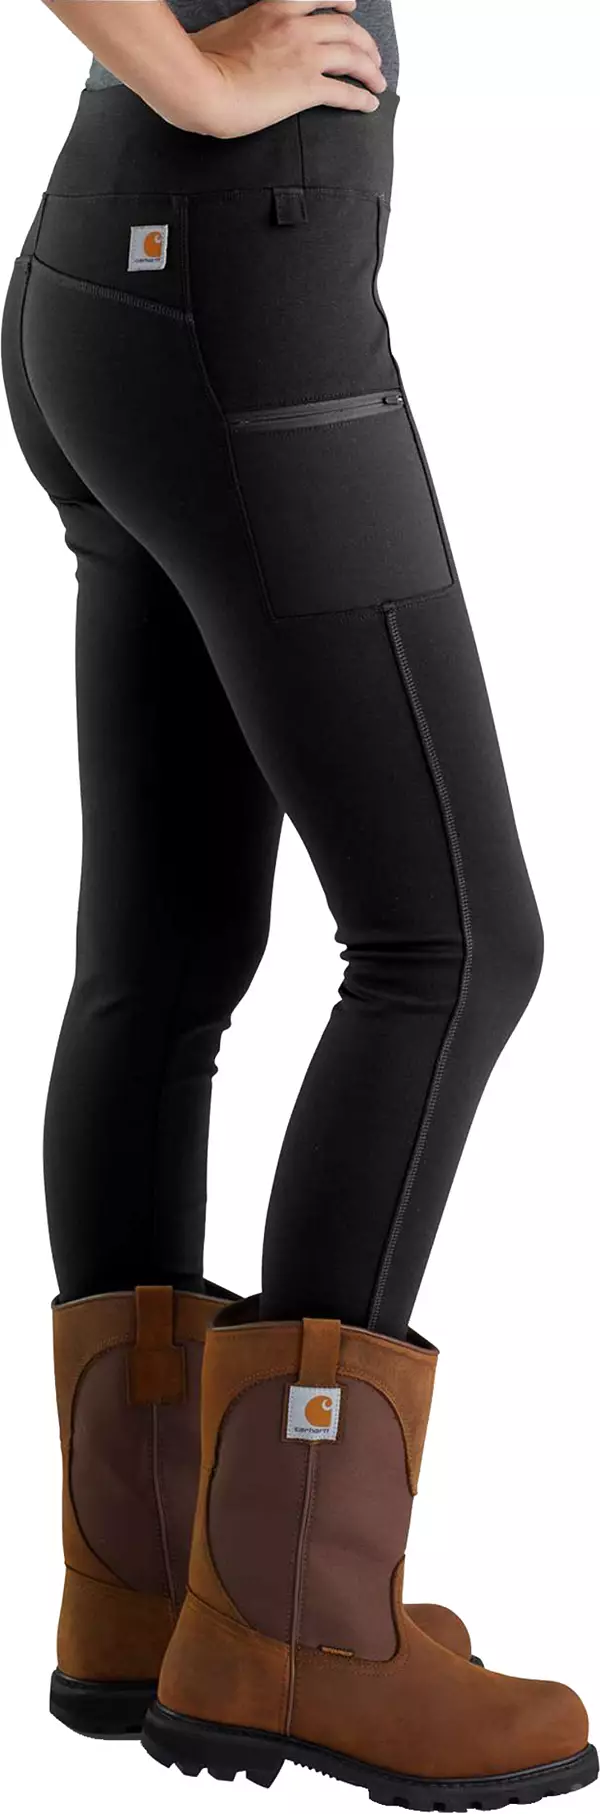 Carhartt Pants: Women's 103609 001 Black Force Lightweight Utility Leggings